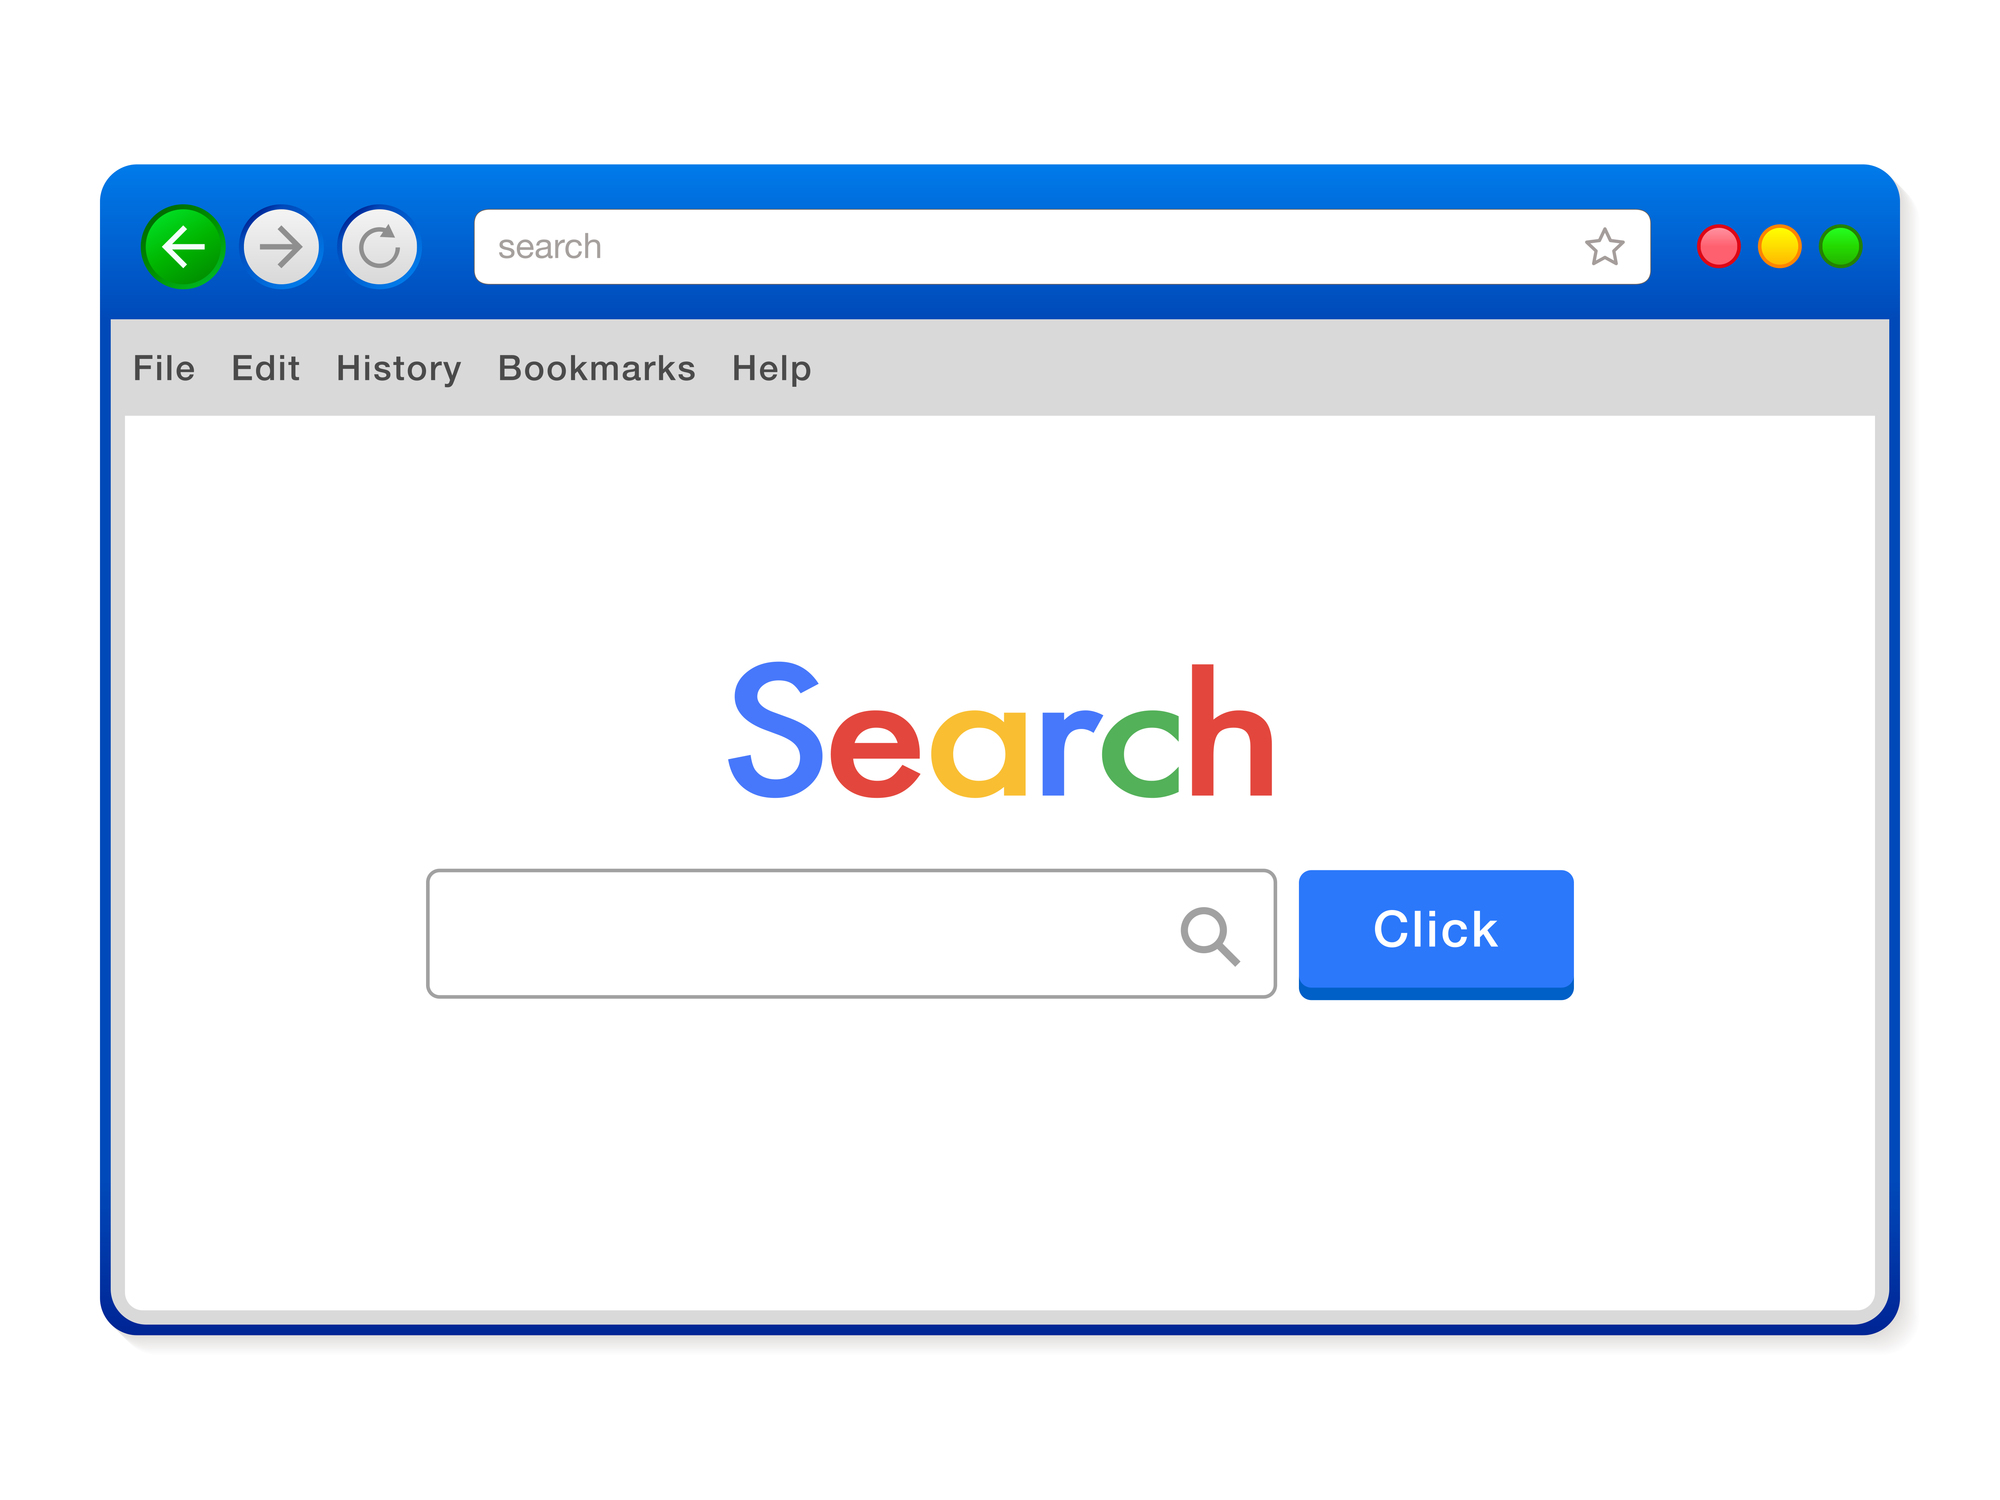 google検索結果画面の項目説明、結果画面の見方を理解しよう！ | SEO対策なら株式会社ペコプラ